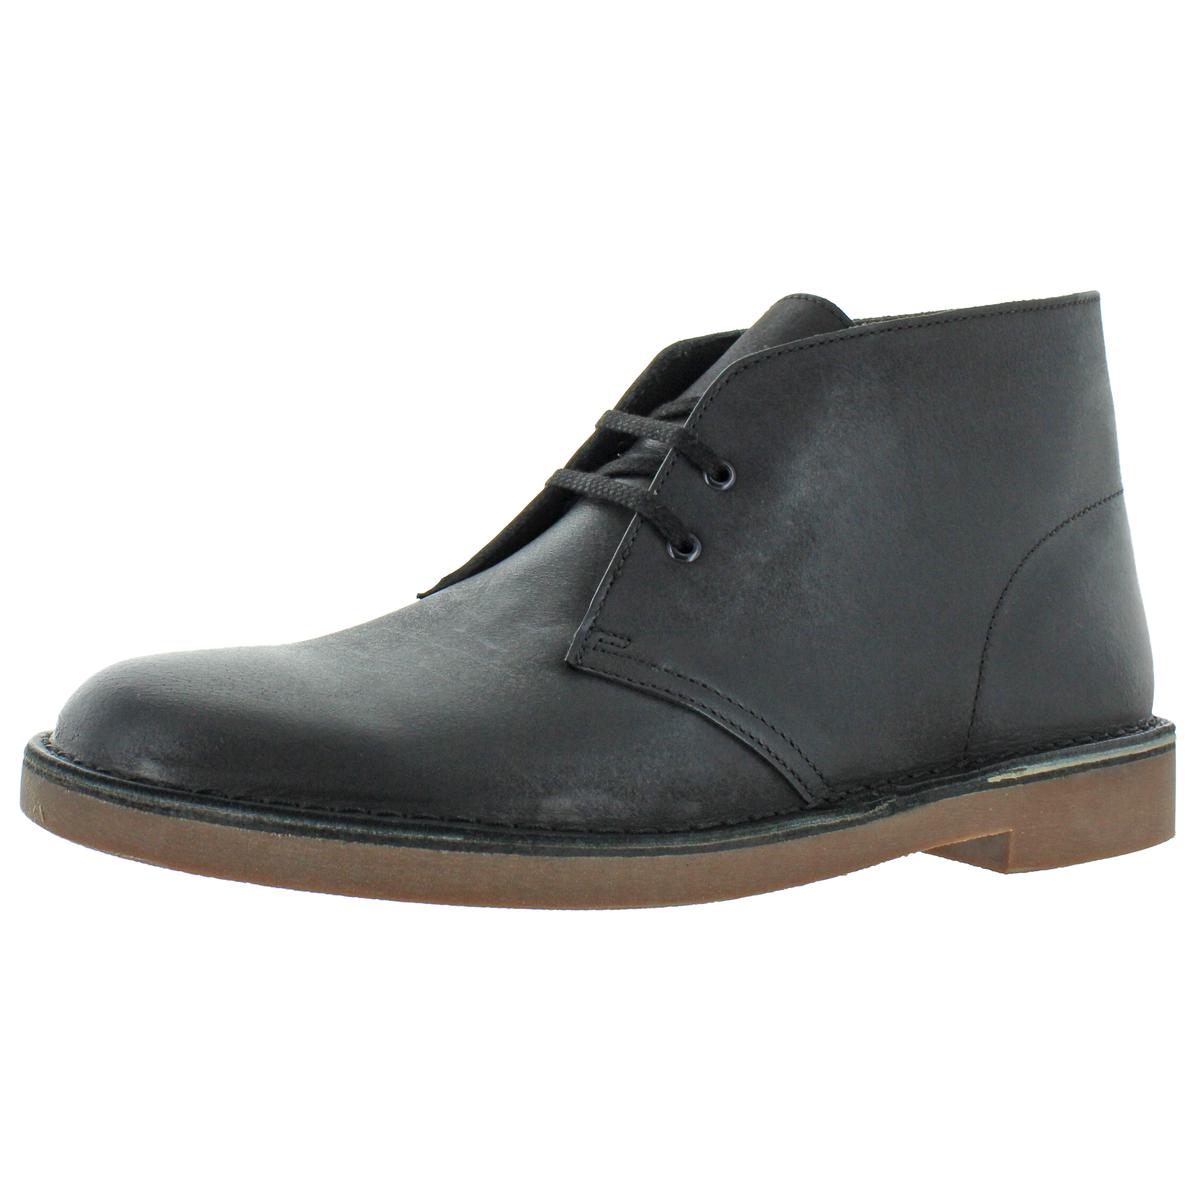 Clarks Mens Bushacre 2 Black Ankle Chukka Boots Shoes 10.5 Medium (D ...